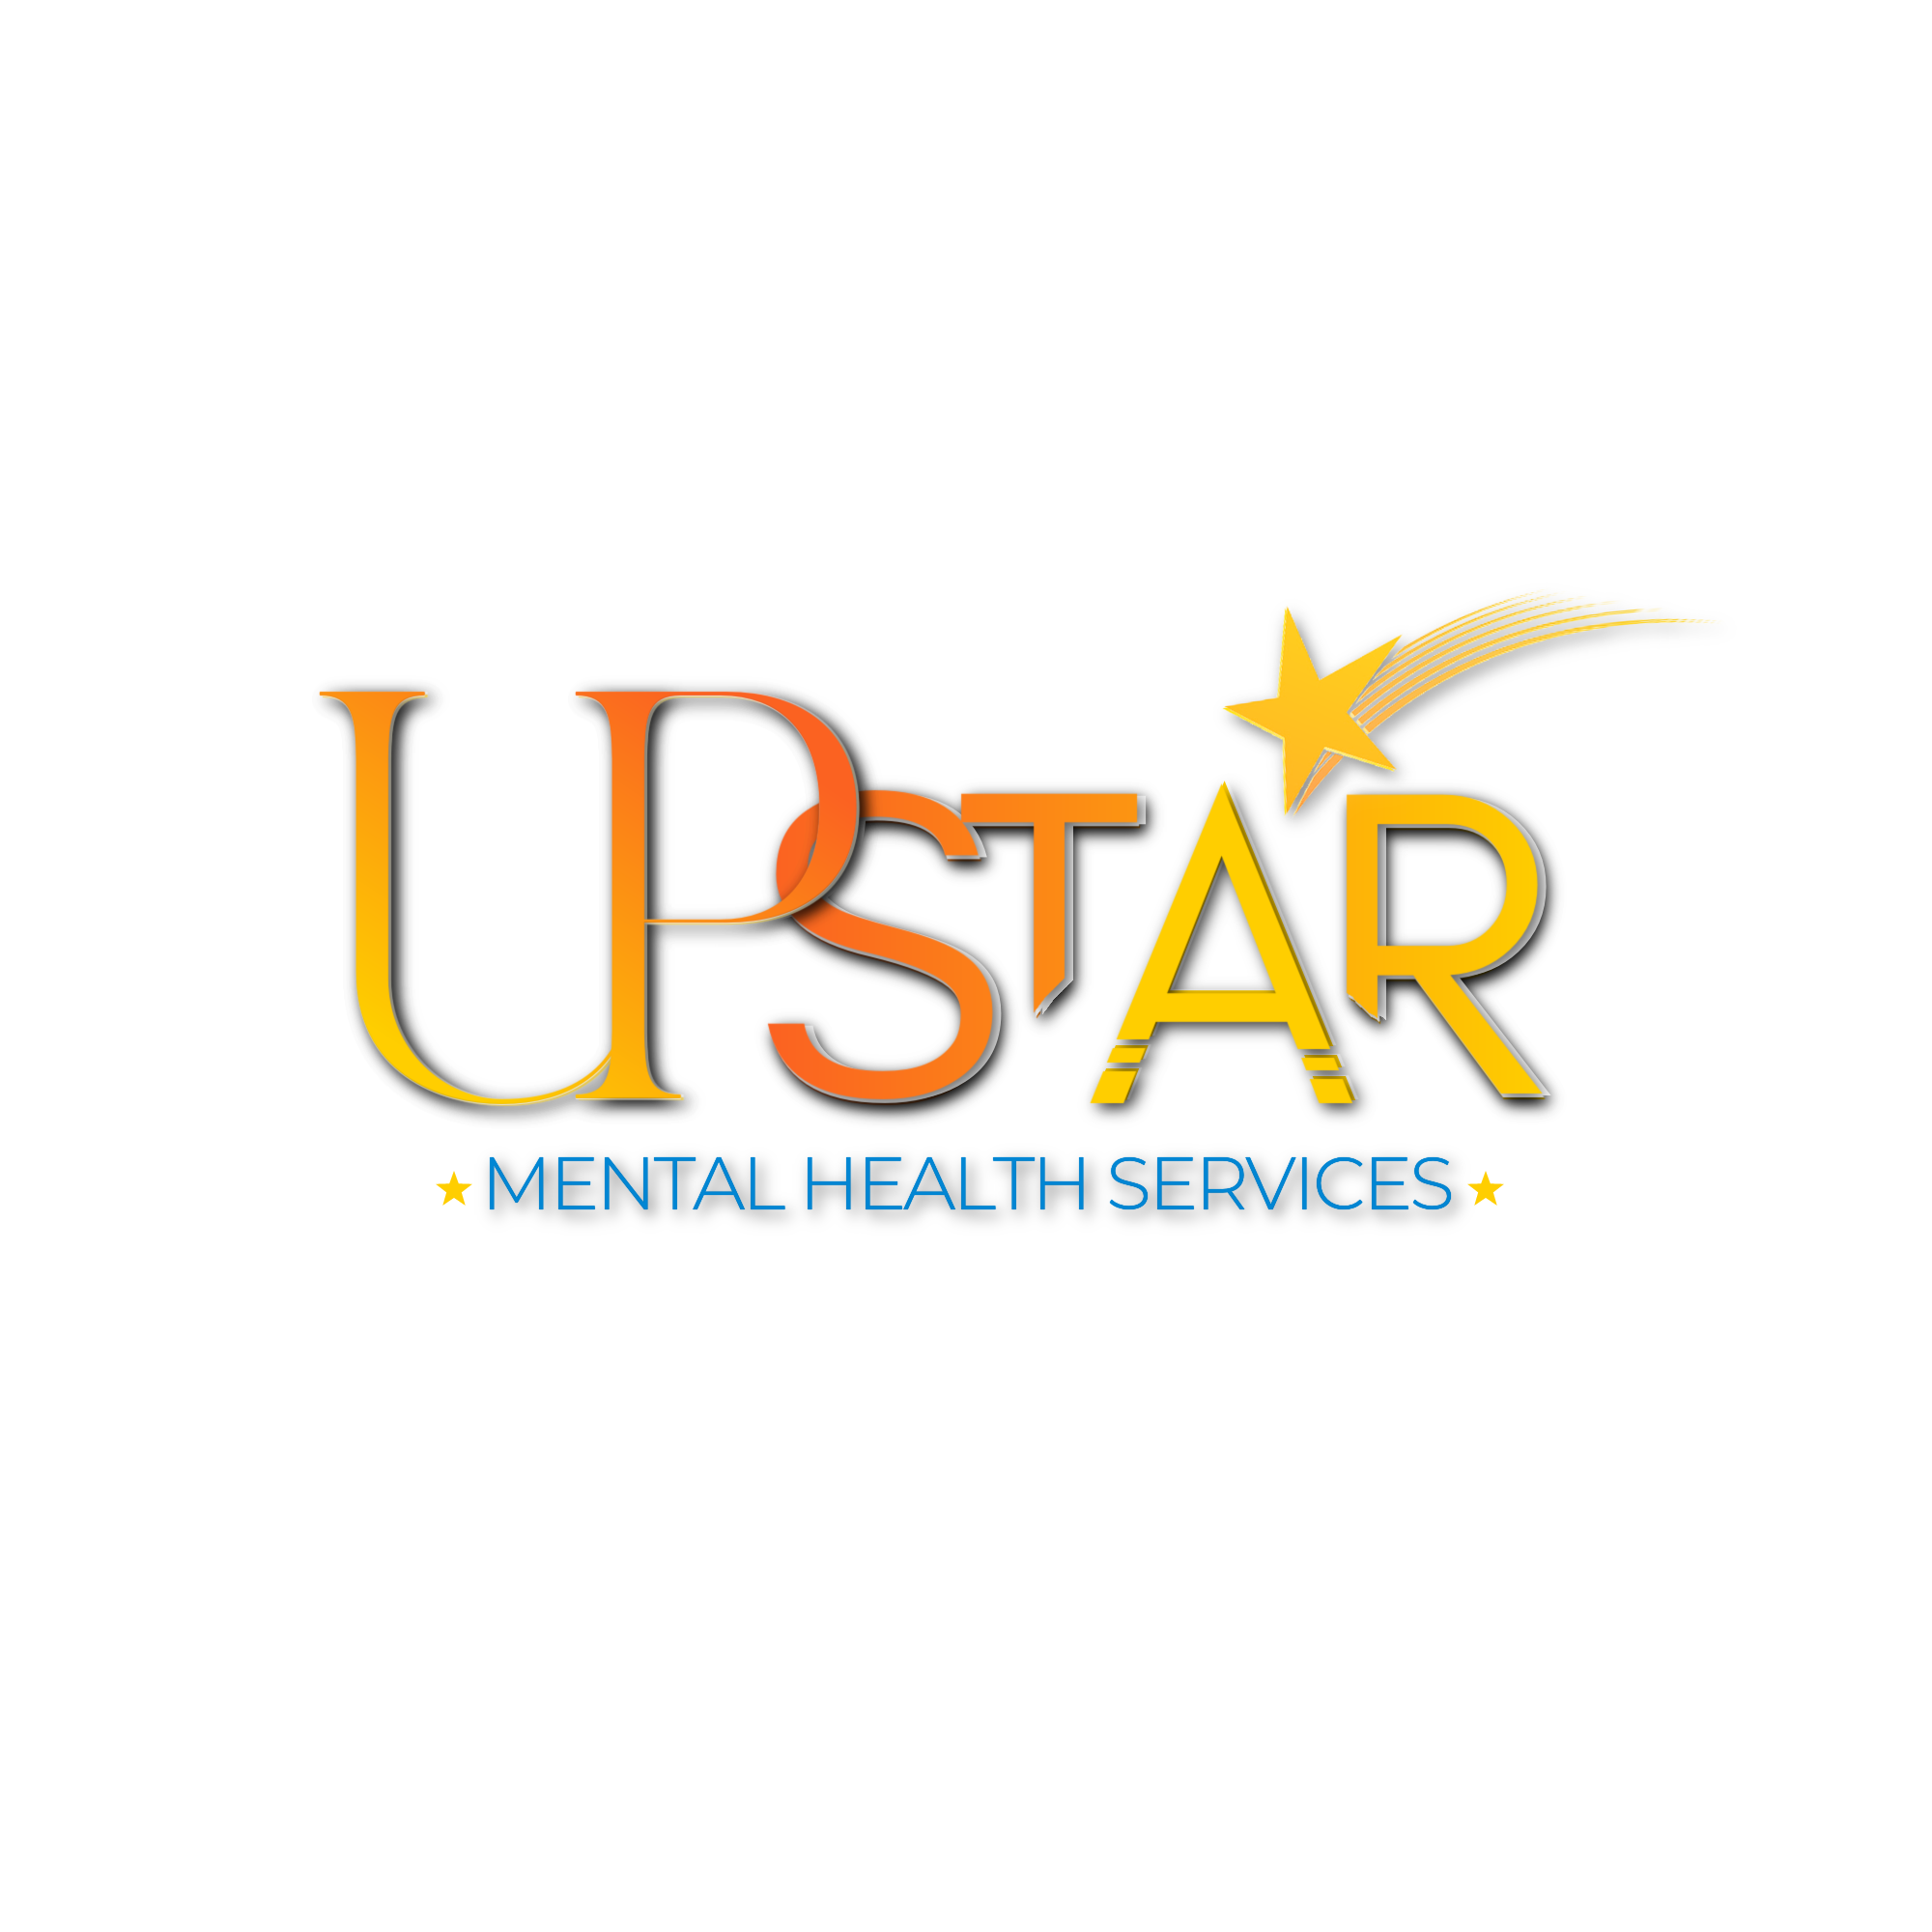 UPSTAR Mental Health Services